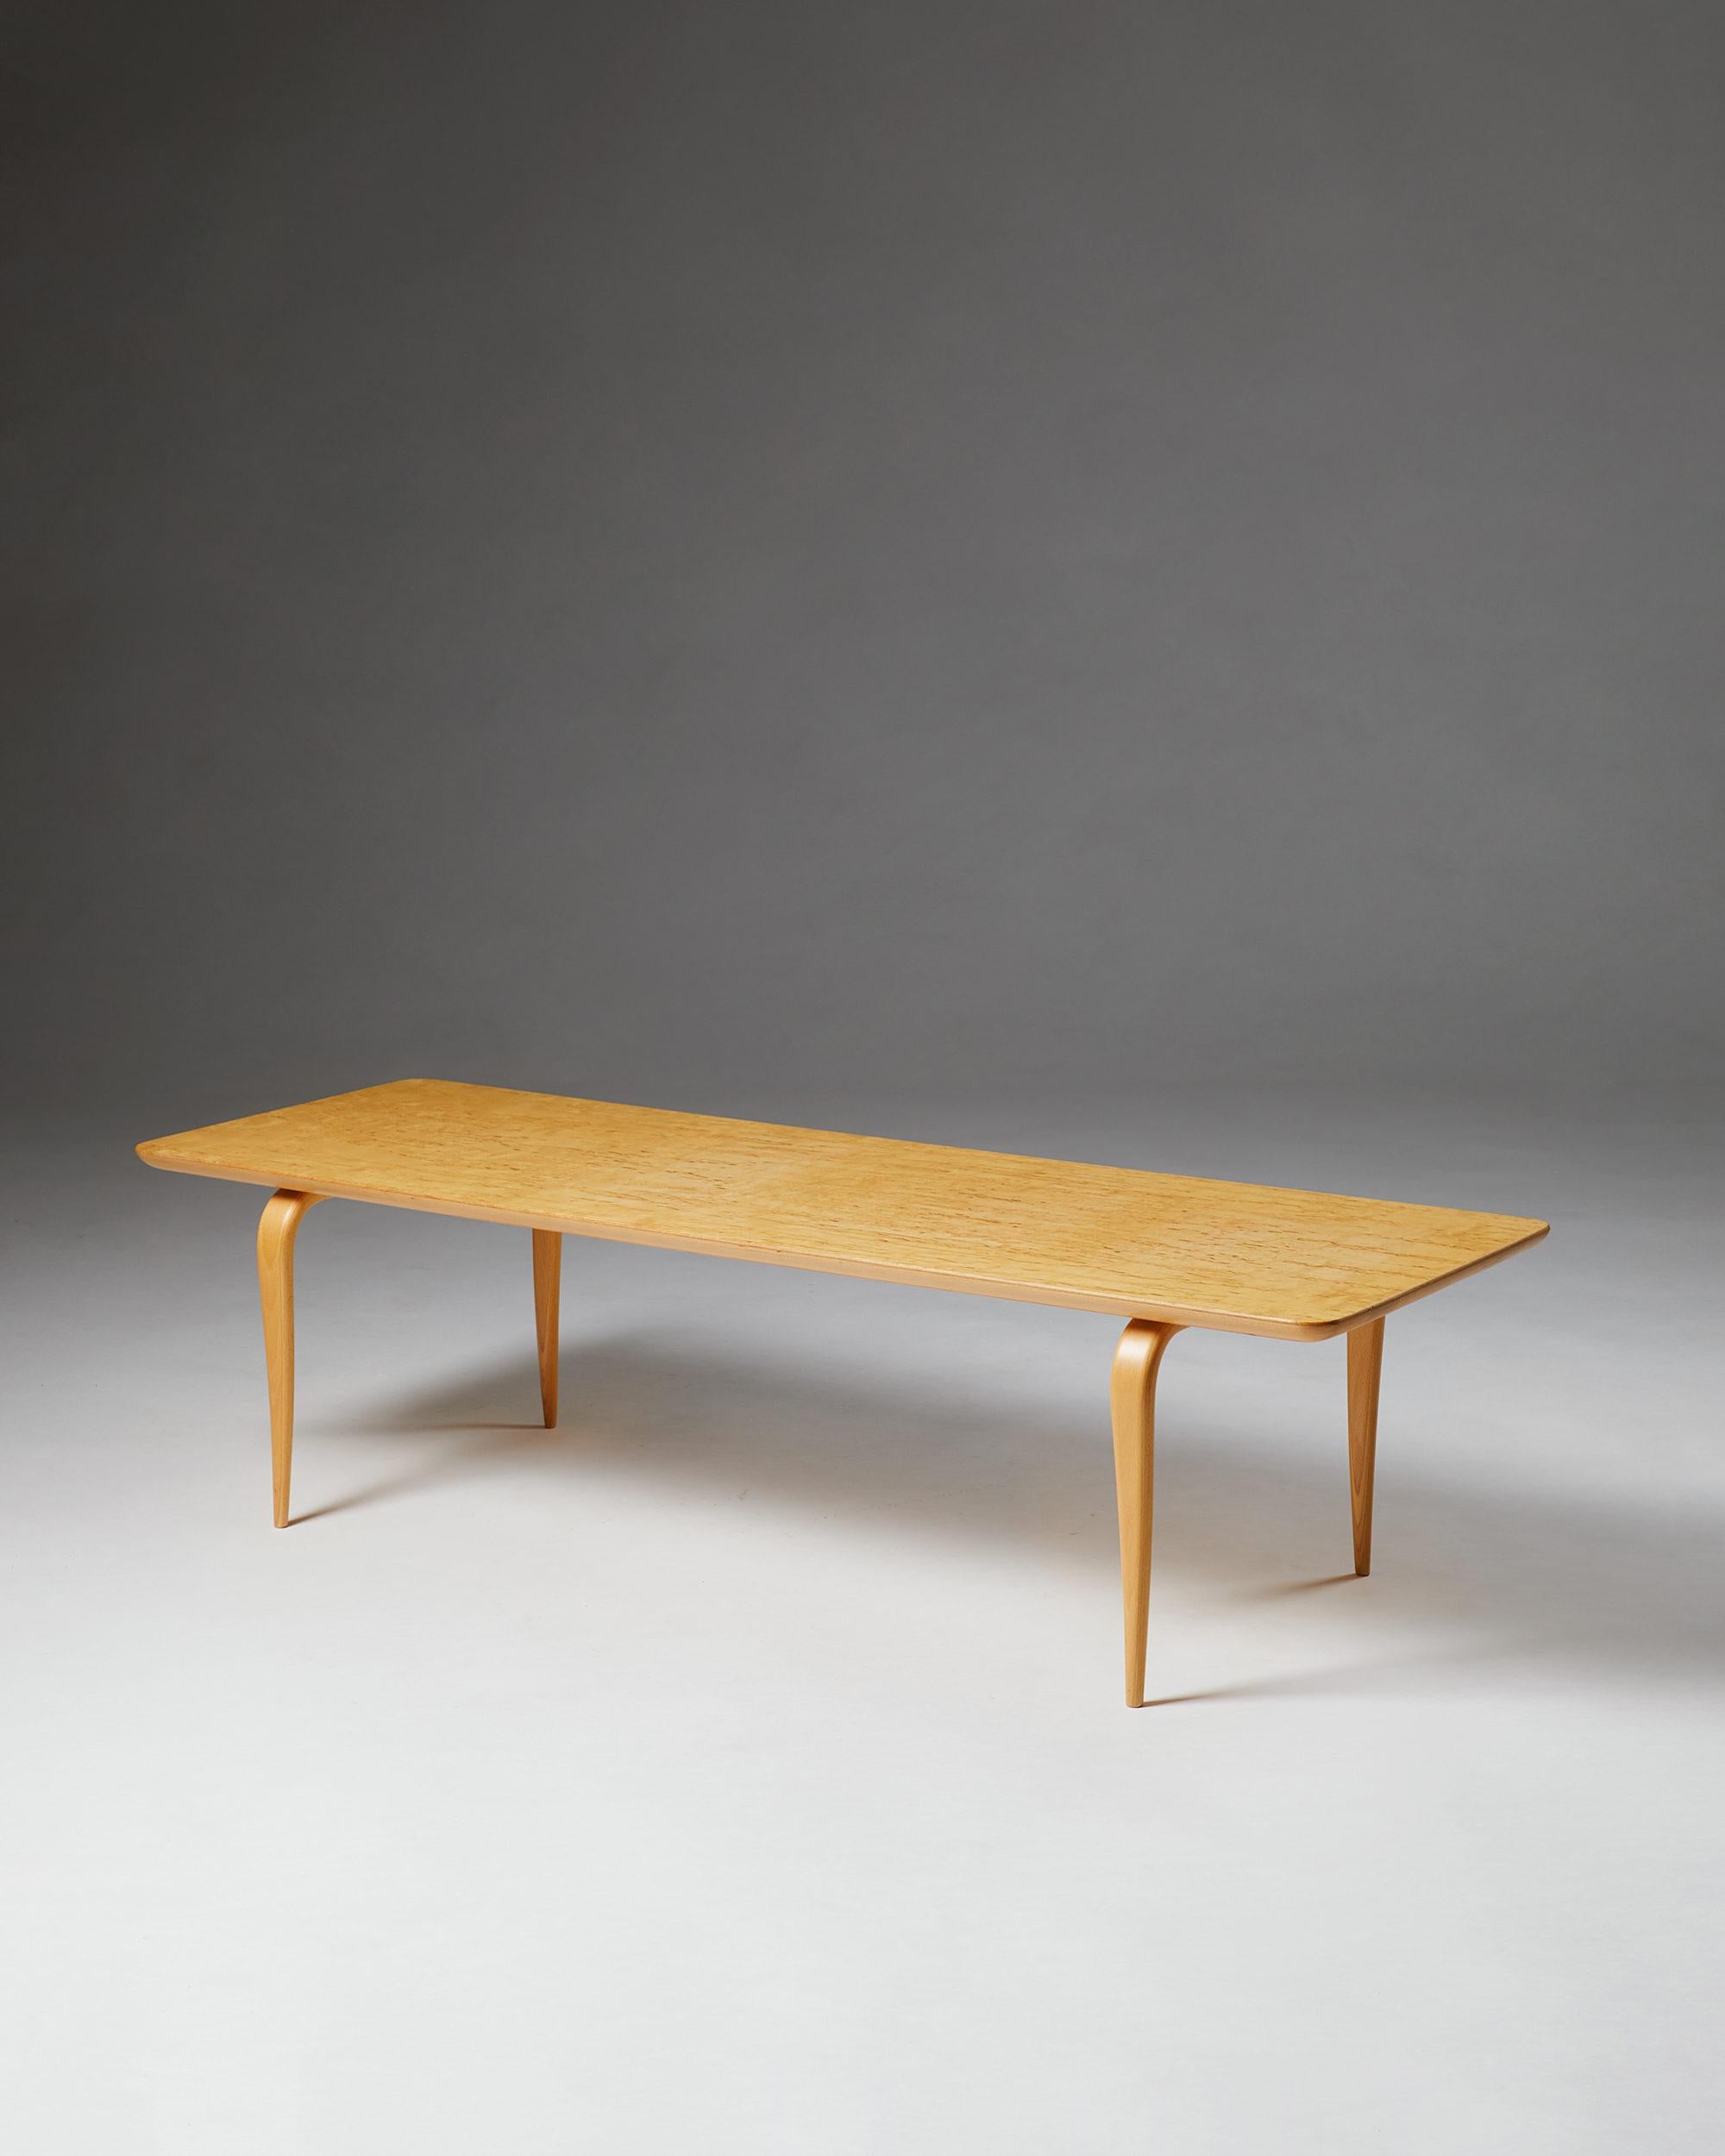 Bench/coffee table “Annika” designed by Bruno Mathsson for Karl Mathsson,
Sweden, 1960s.
Karelian birch.

Measures: H 32 cm / 1' 3/5